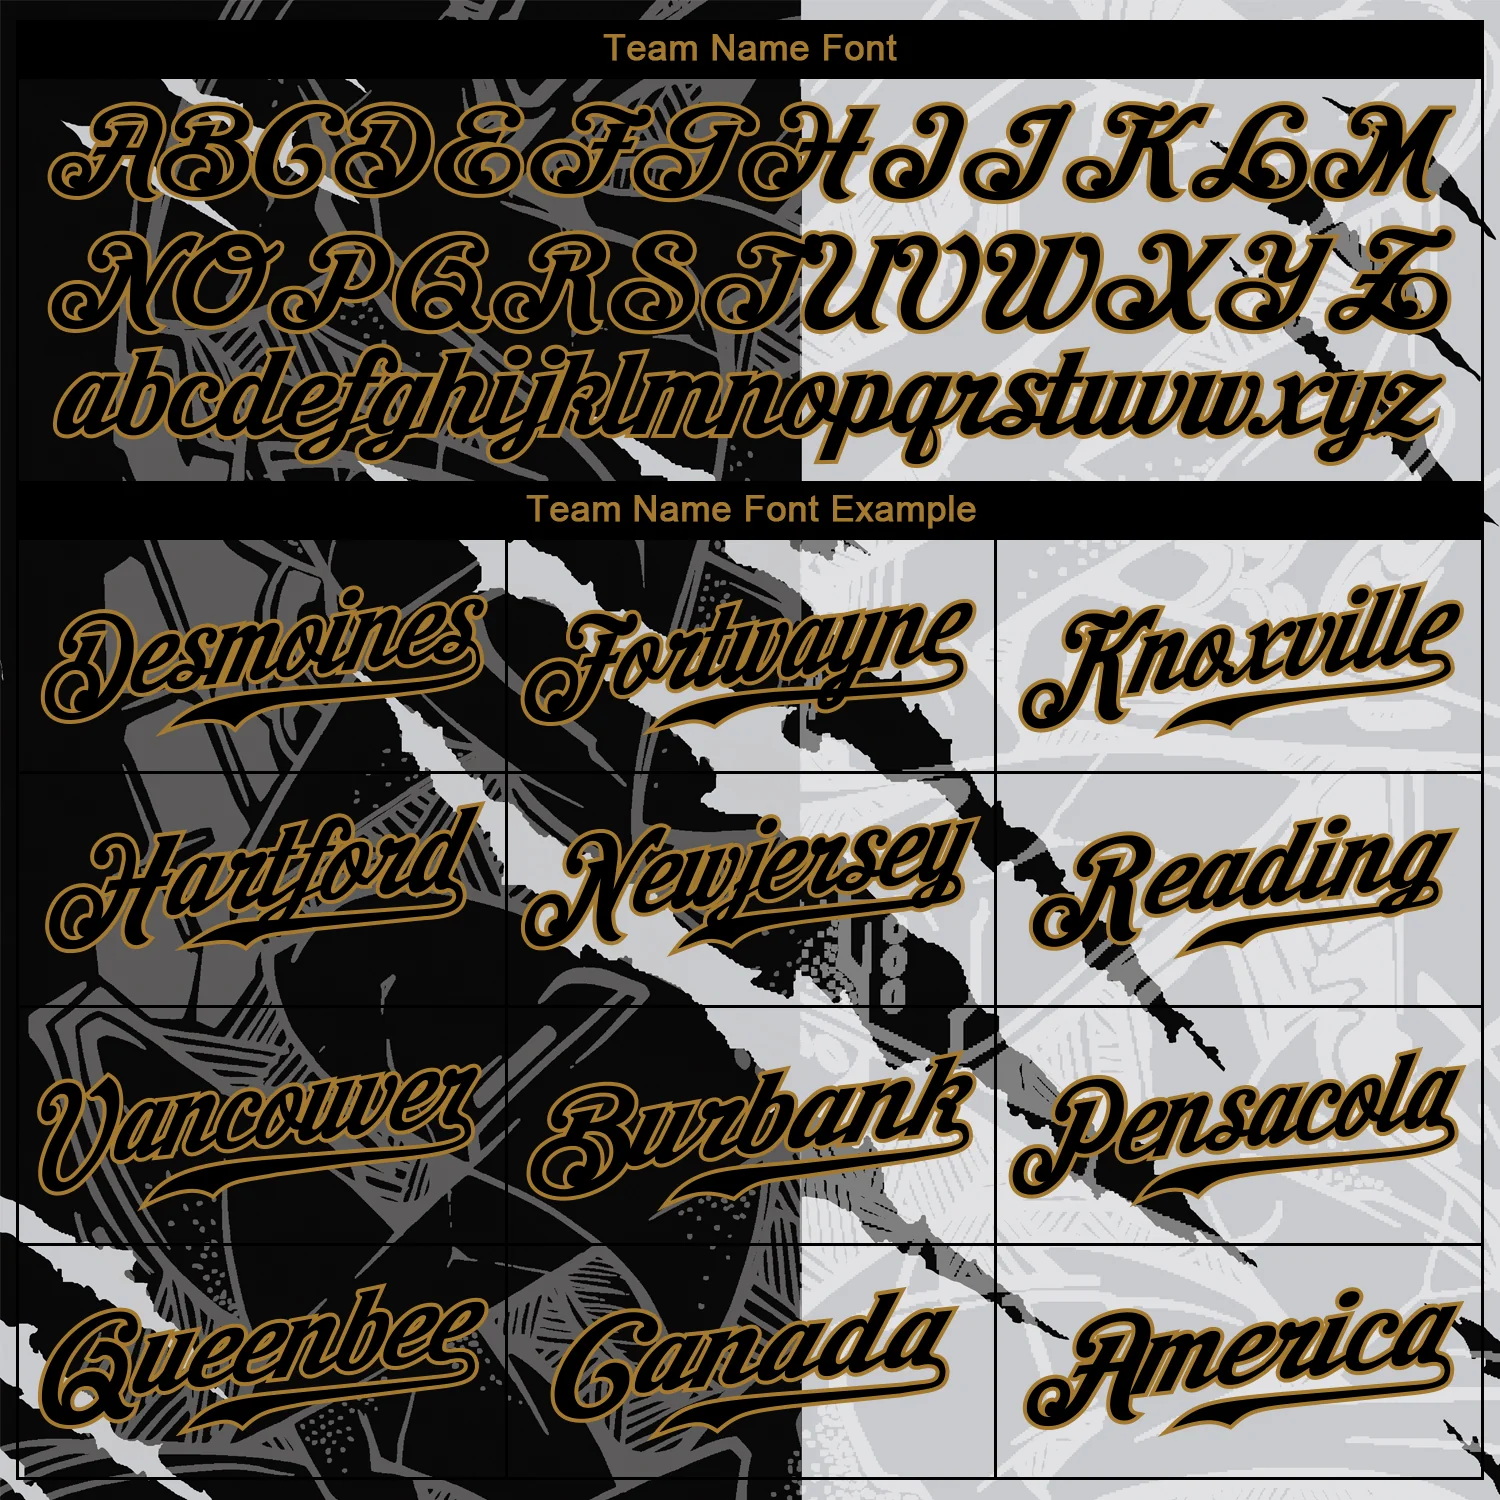 Custom Black Black-Old Gold Authentic Baseball Jersey